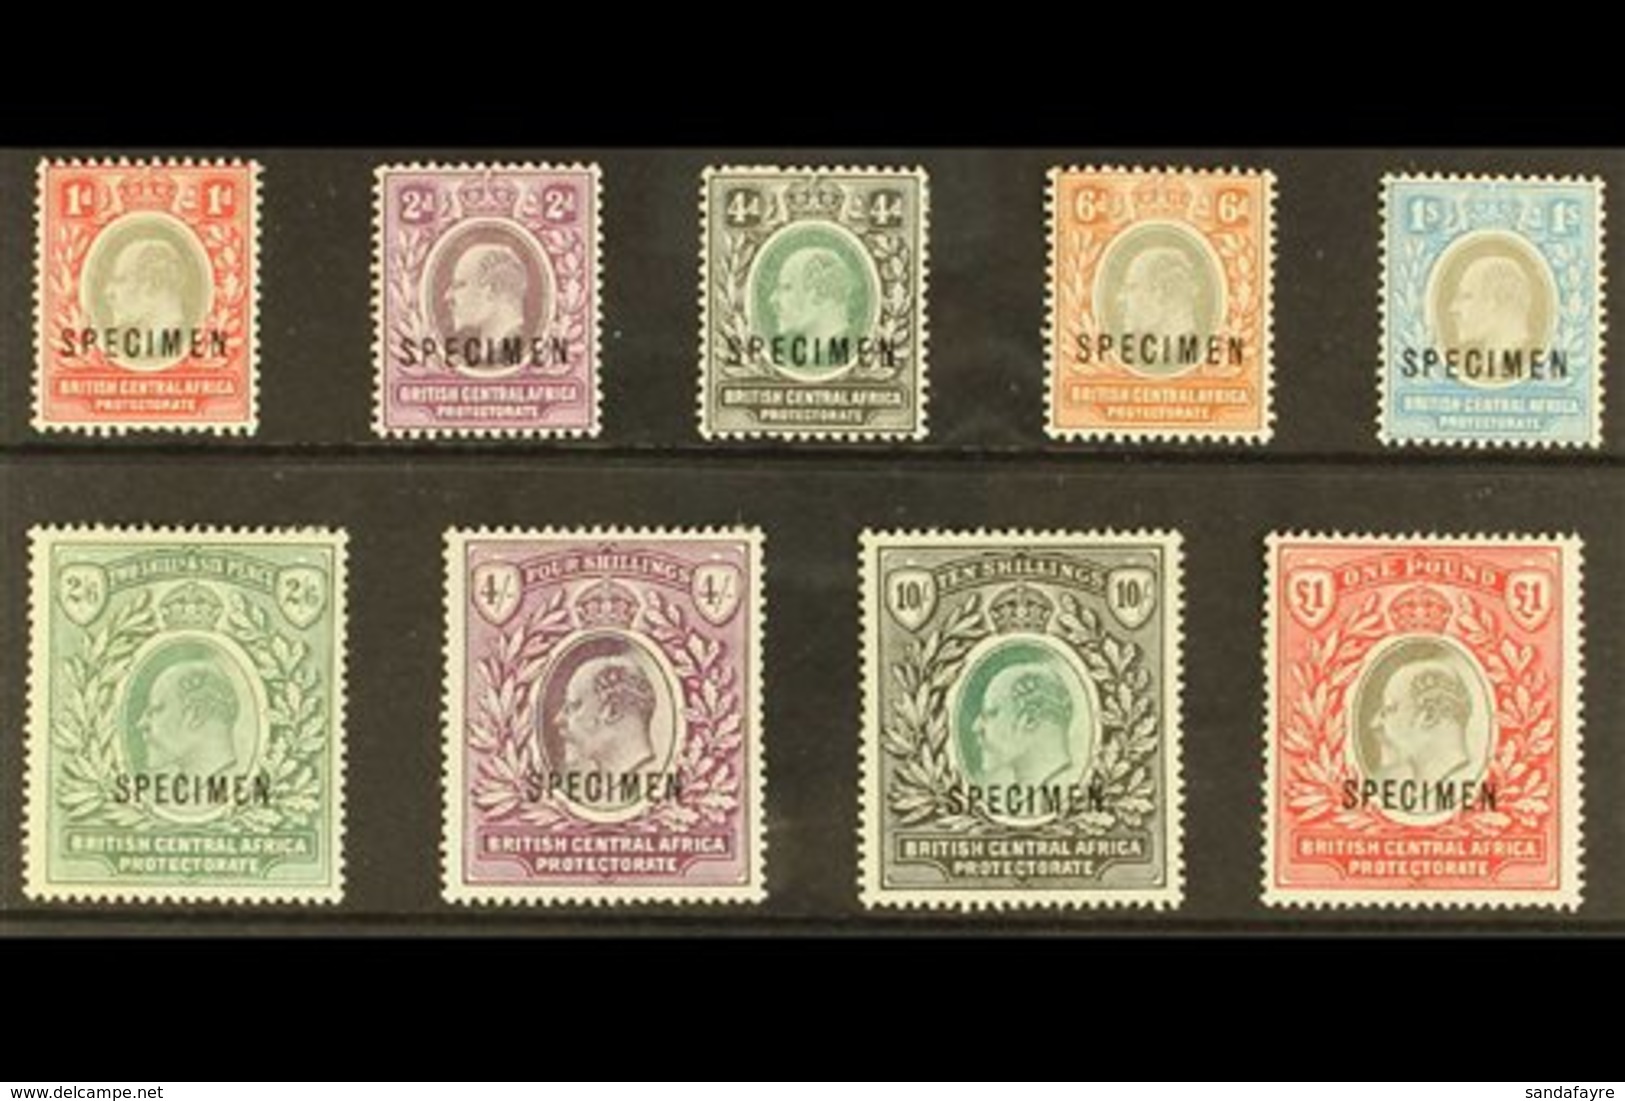 1903-04 Set Complete Opt'd "SPECIMEN", SG 59s/66s, Mint Part OG, Very Fresh & Attractive (9 Stamps) For More Images, Ple - Nyasaland (1907-1953)